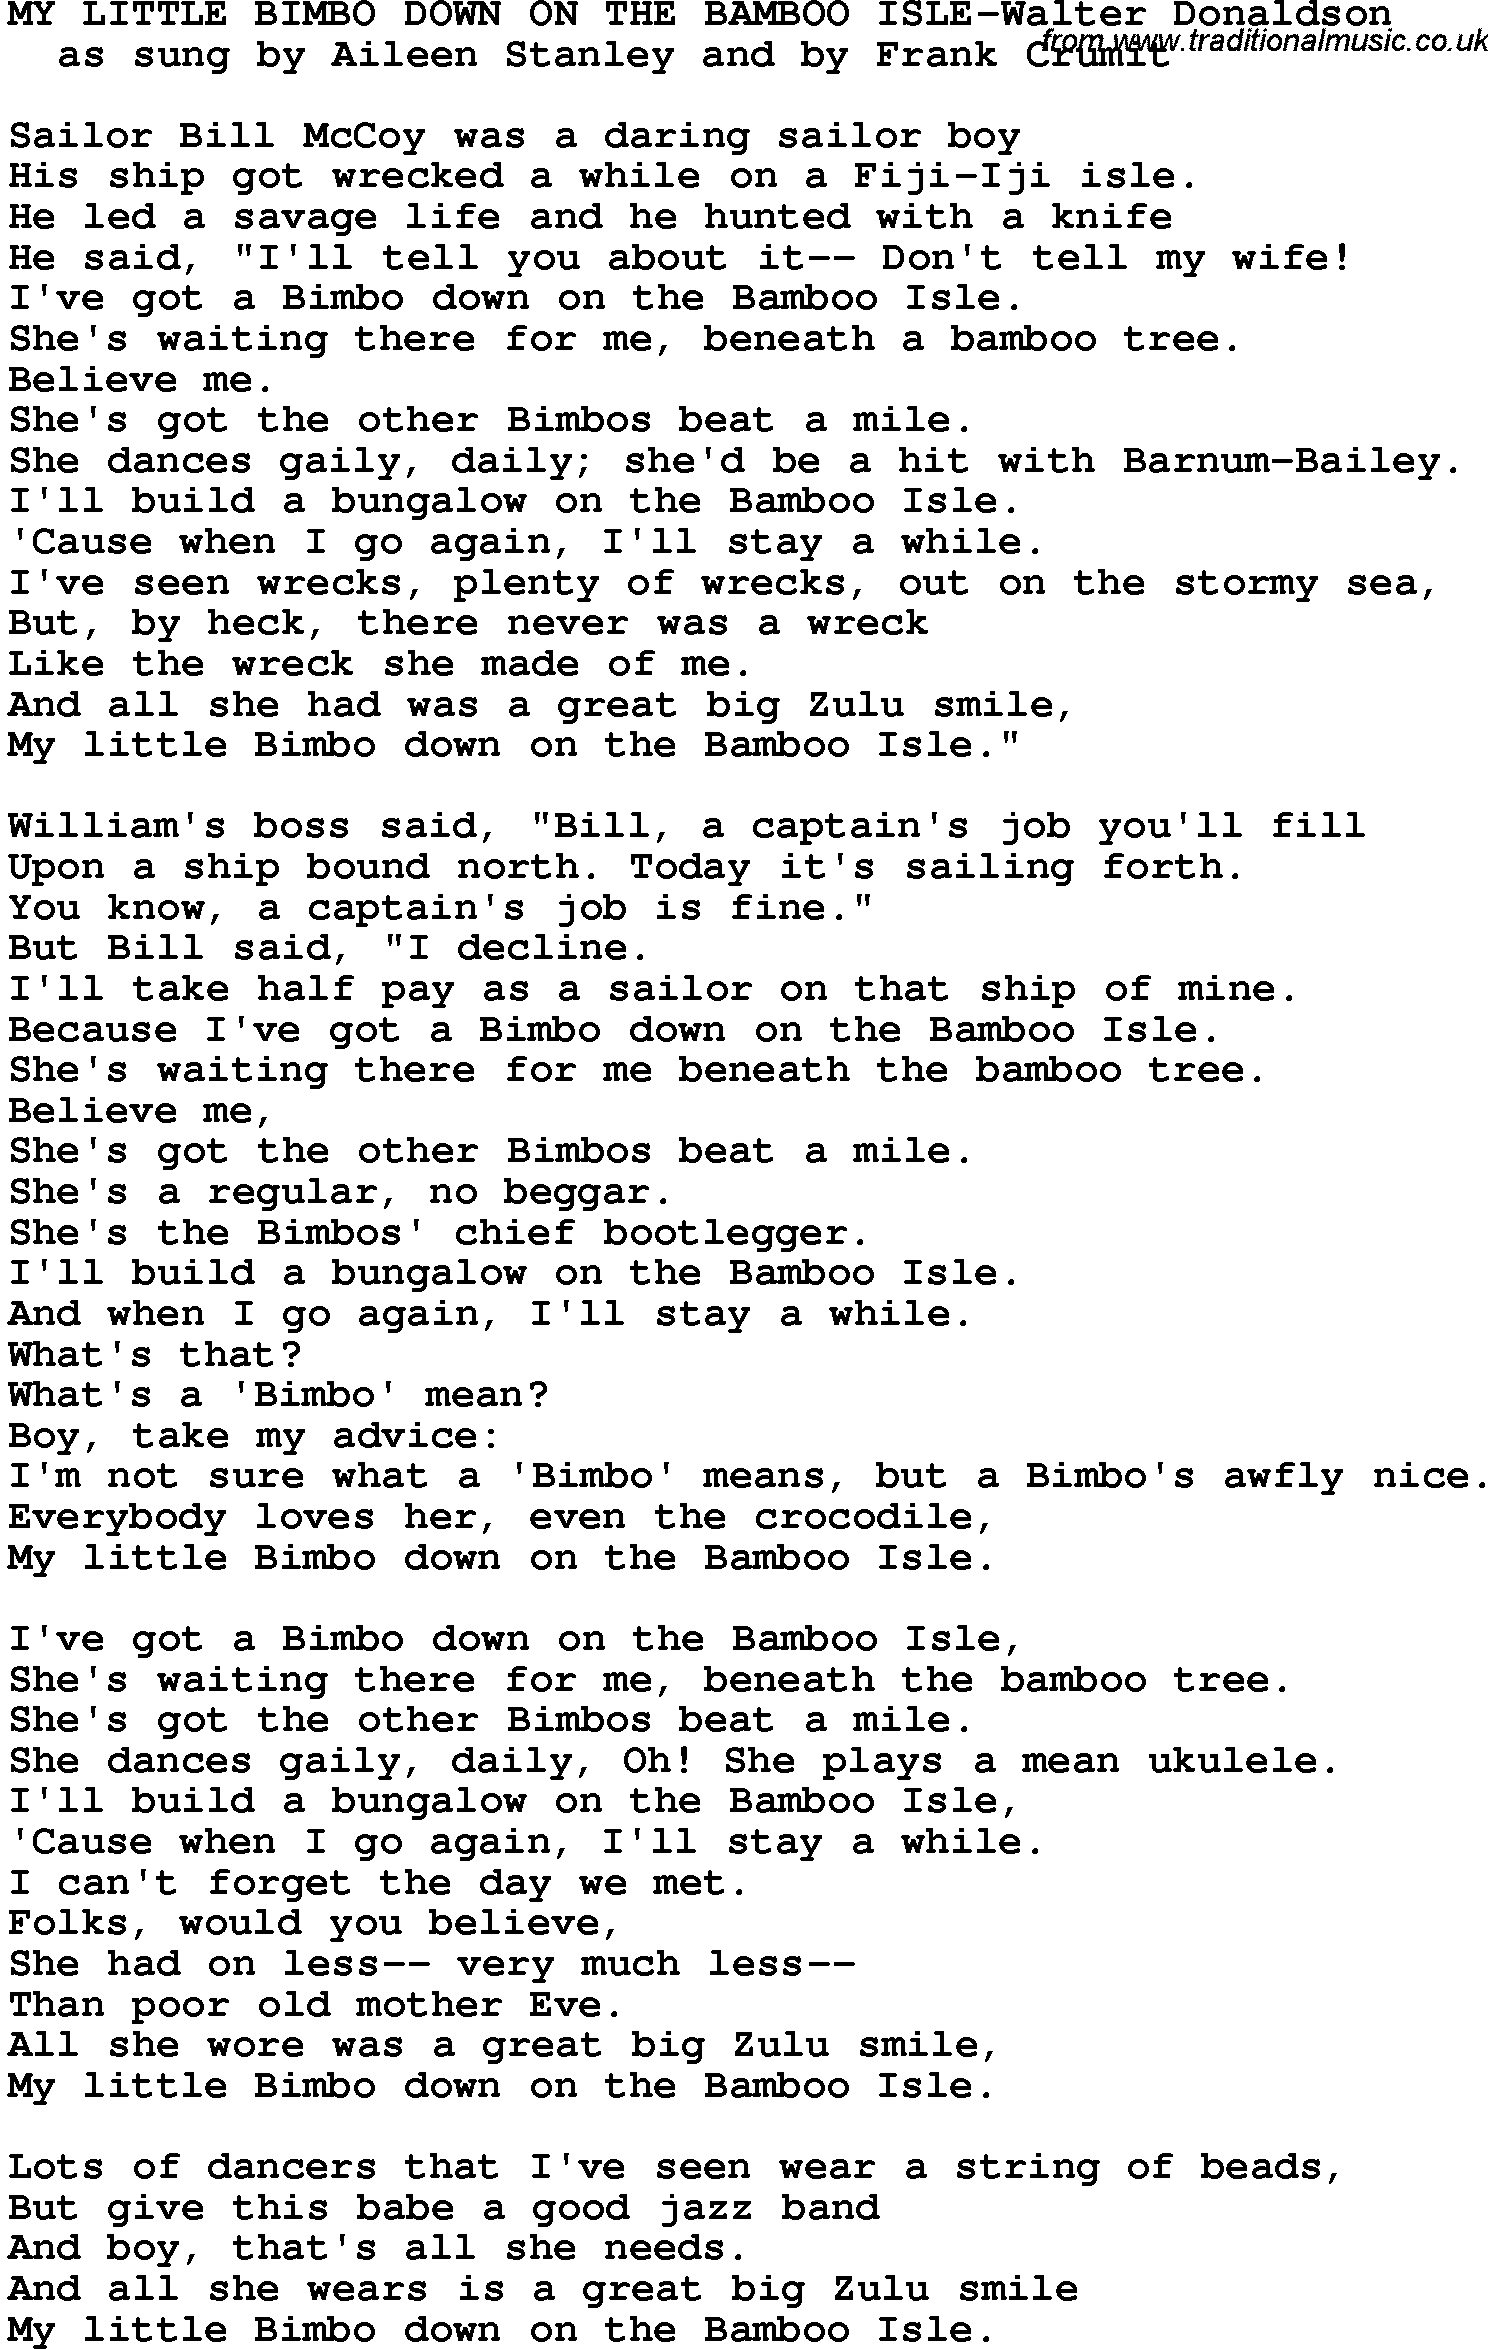 Novelty song: My Little Bimbo Down On The Bamboo Isle-Walter Donaldson lyrics